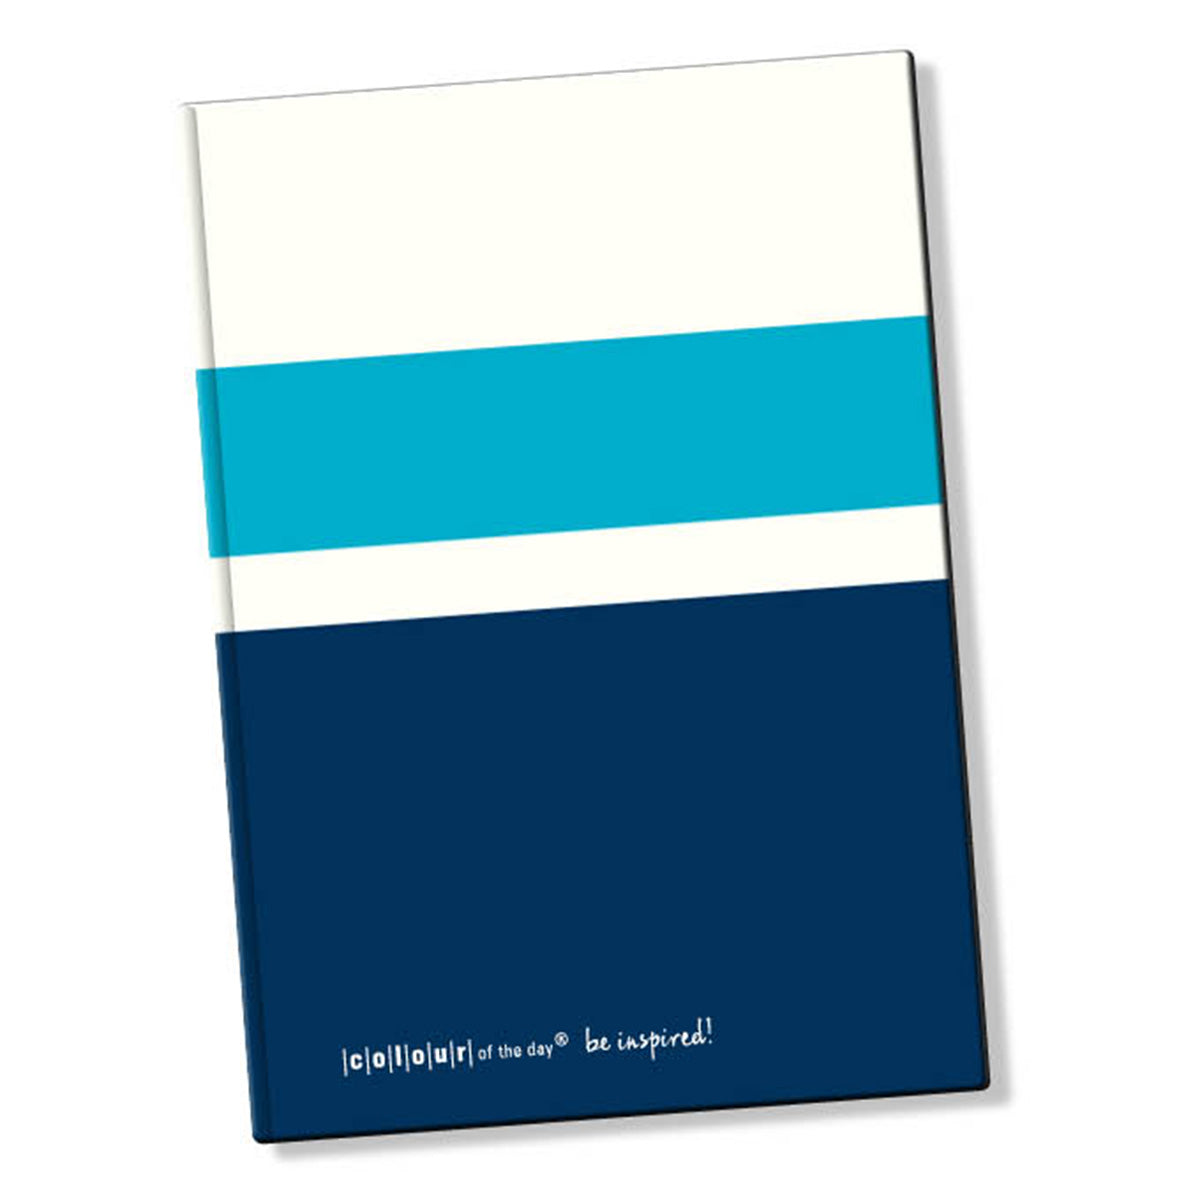 Hochwertiges Notizbuch | Formate DIN A4 + DIN A5 | 